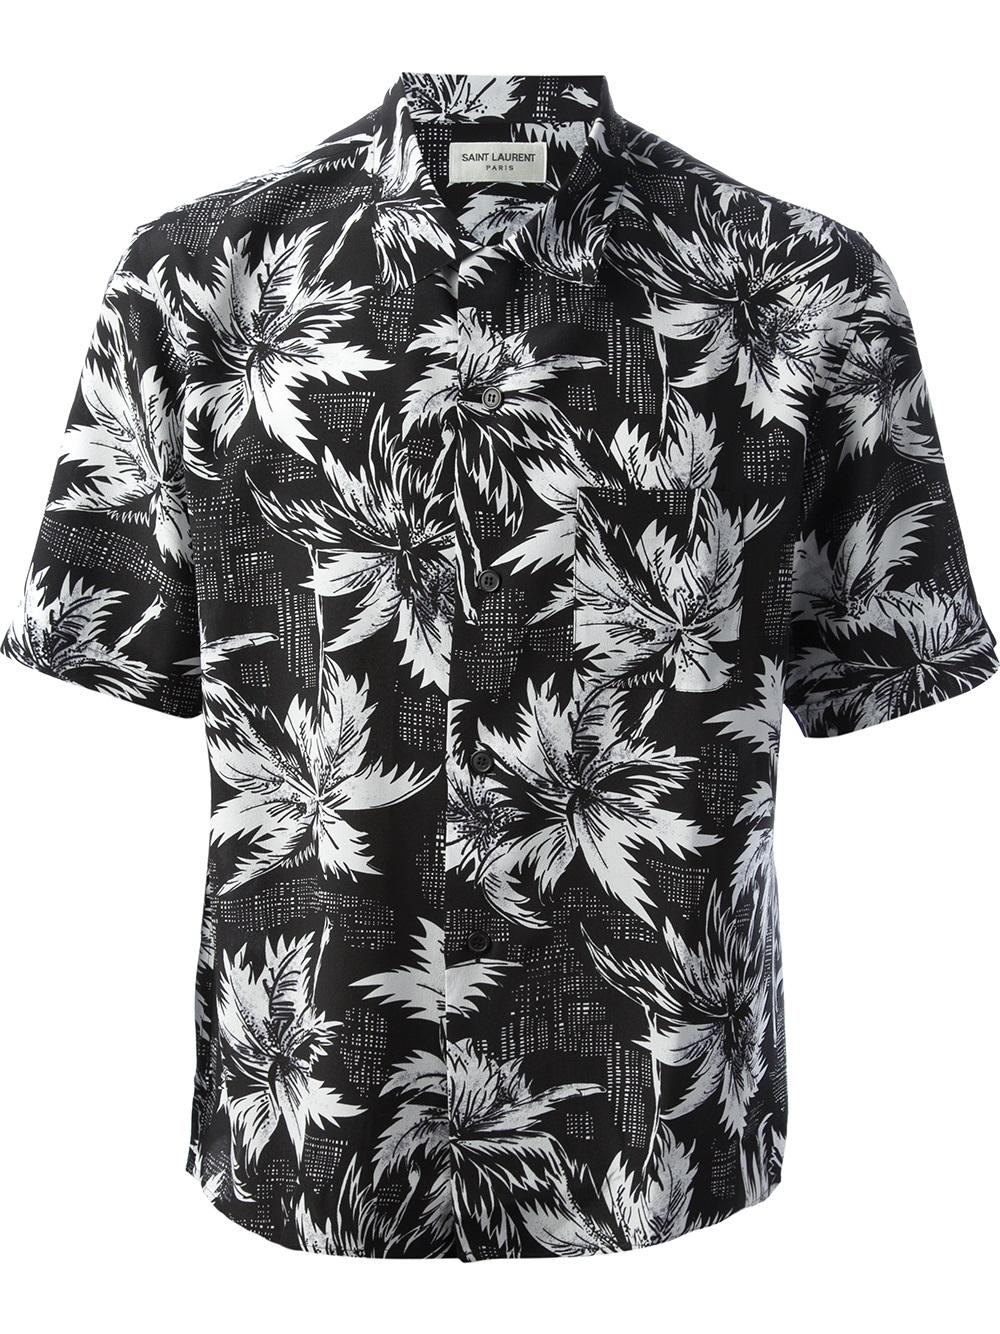 Saint laurent Hawaiian Flower Printed Shirt in Black for Men | Lyst